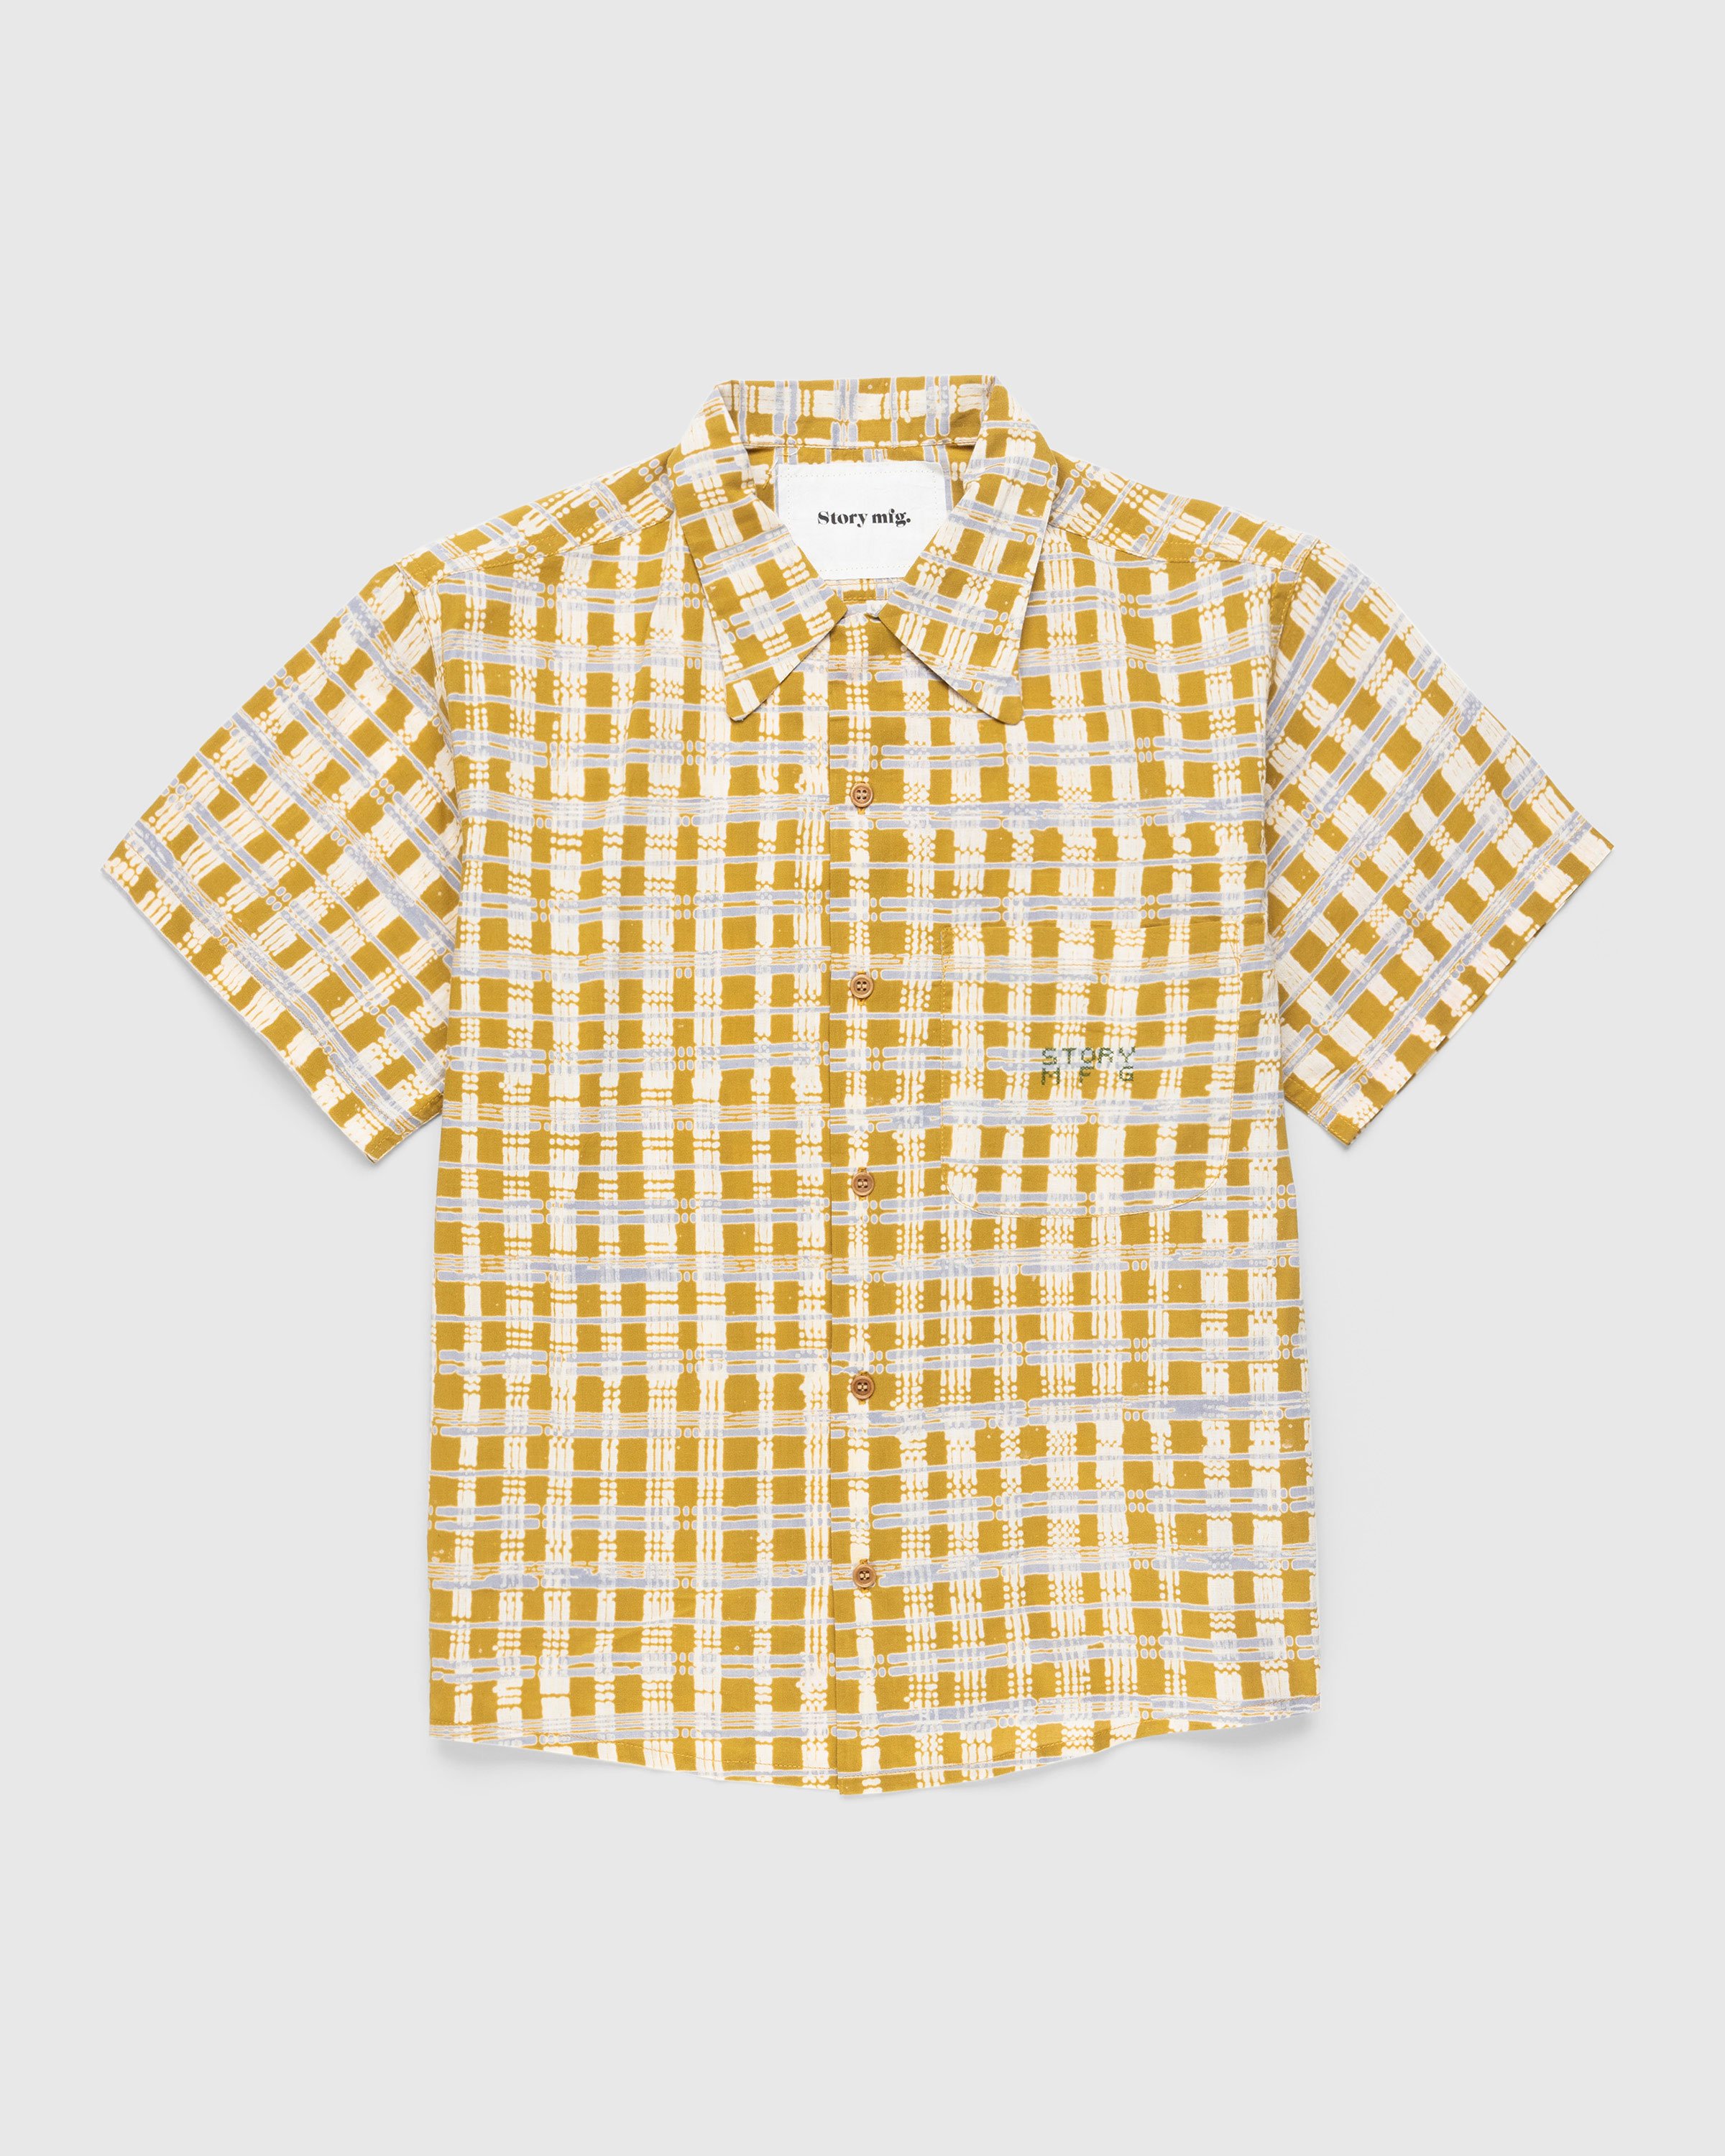 Story mfg. - Shore Shirt Check Block - Clothing - Yellow - Image 1